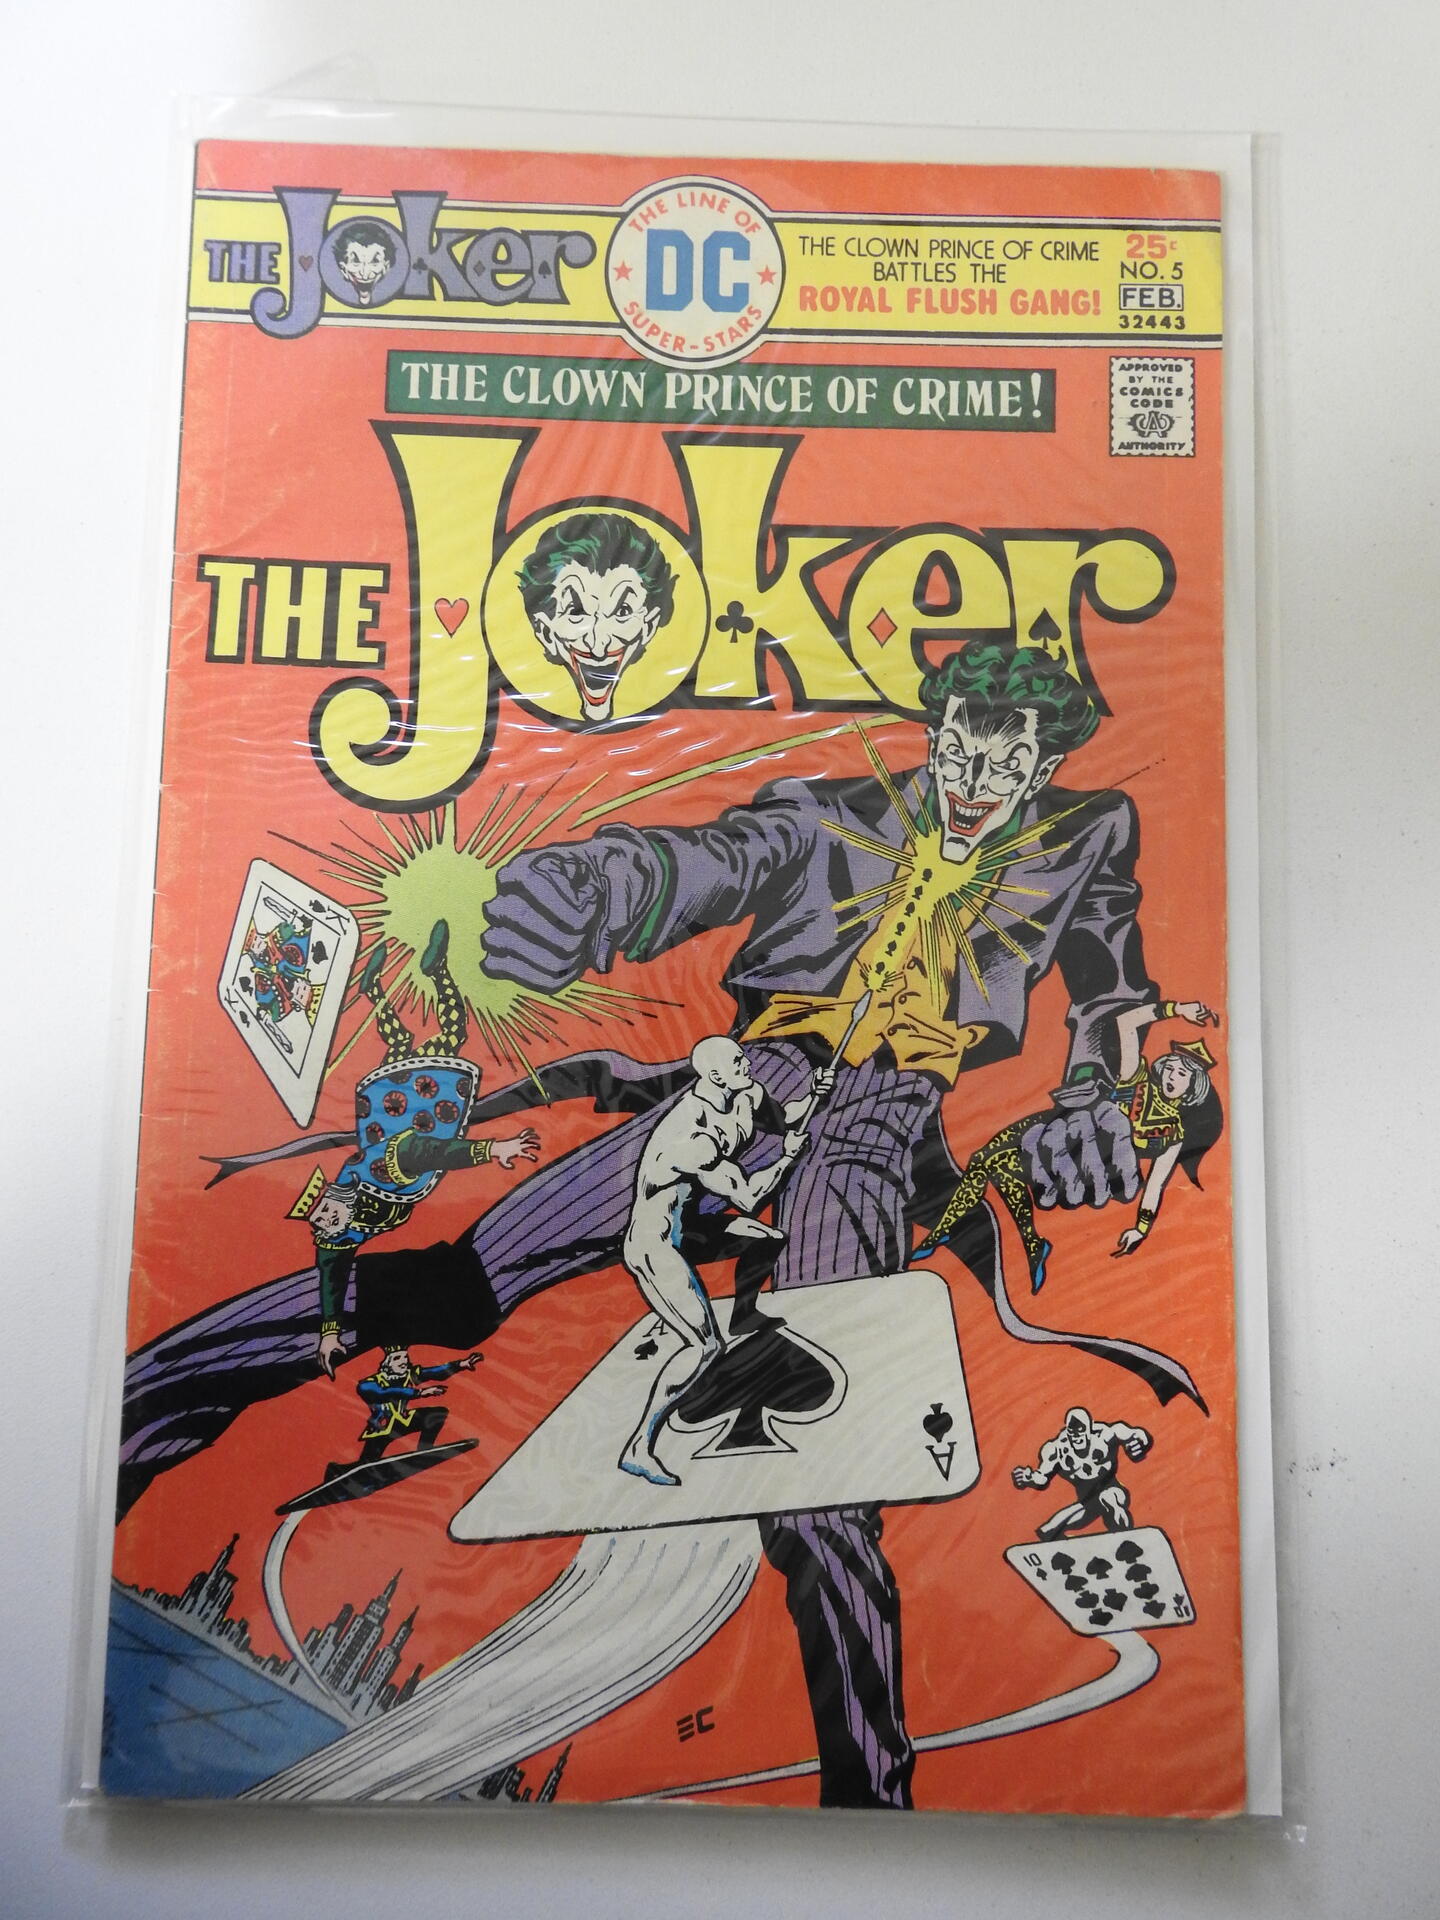 The Joker #5 (1976) | Comic Books - Bronze Age, DC Comics, Joker ...